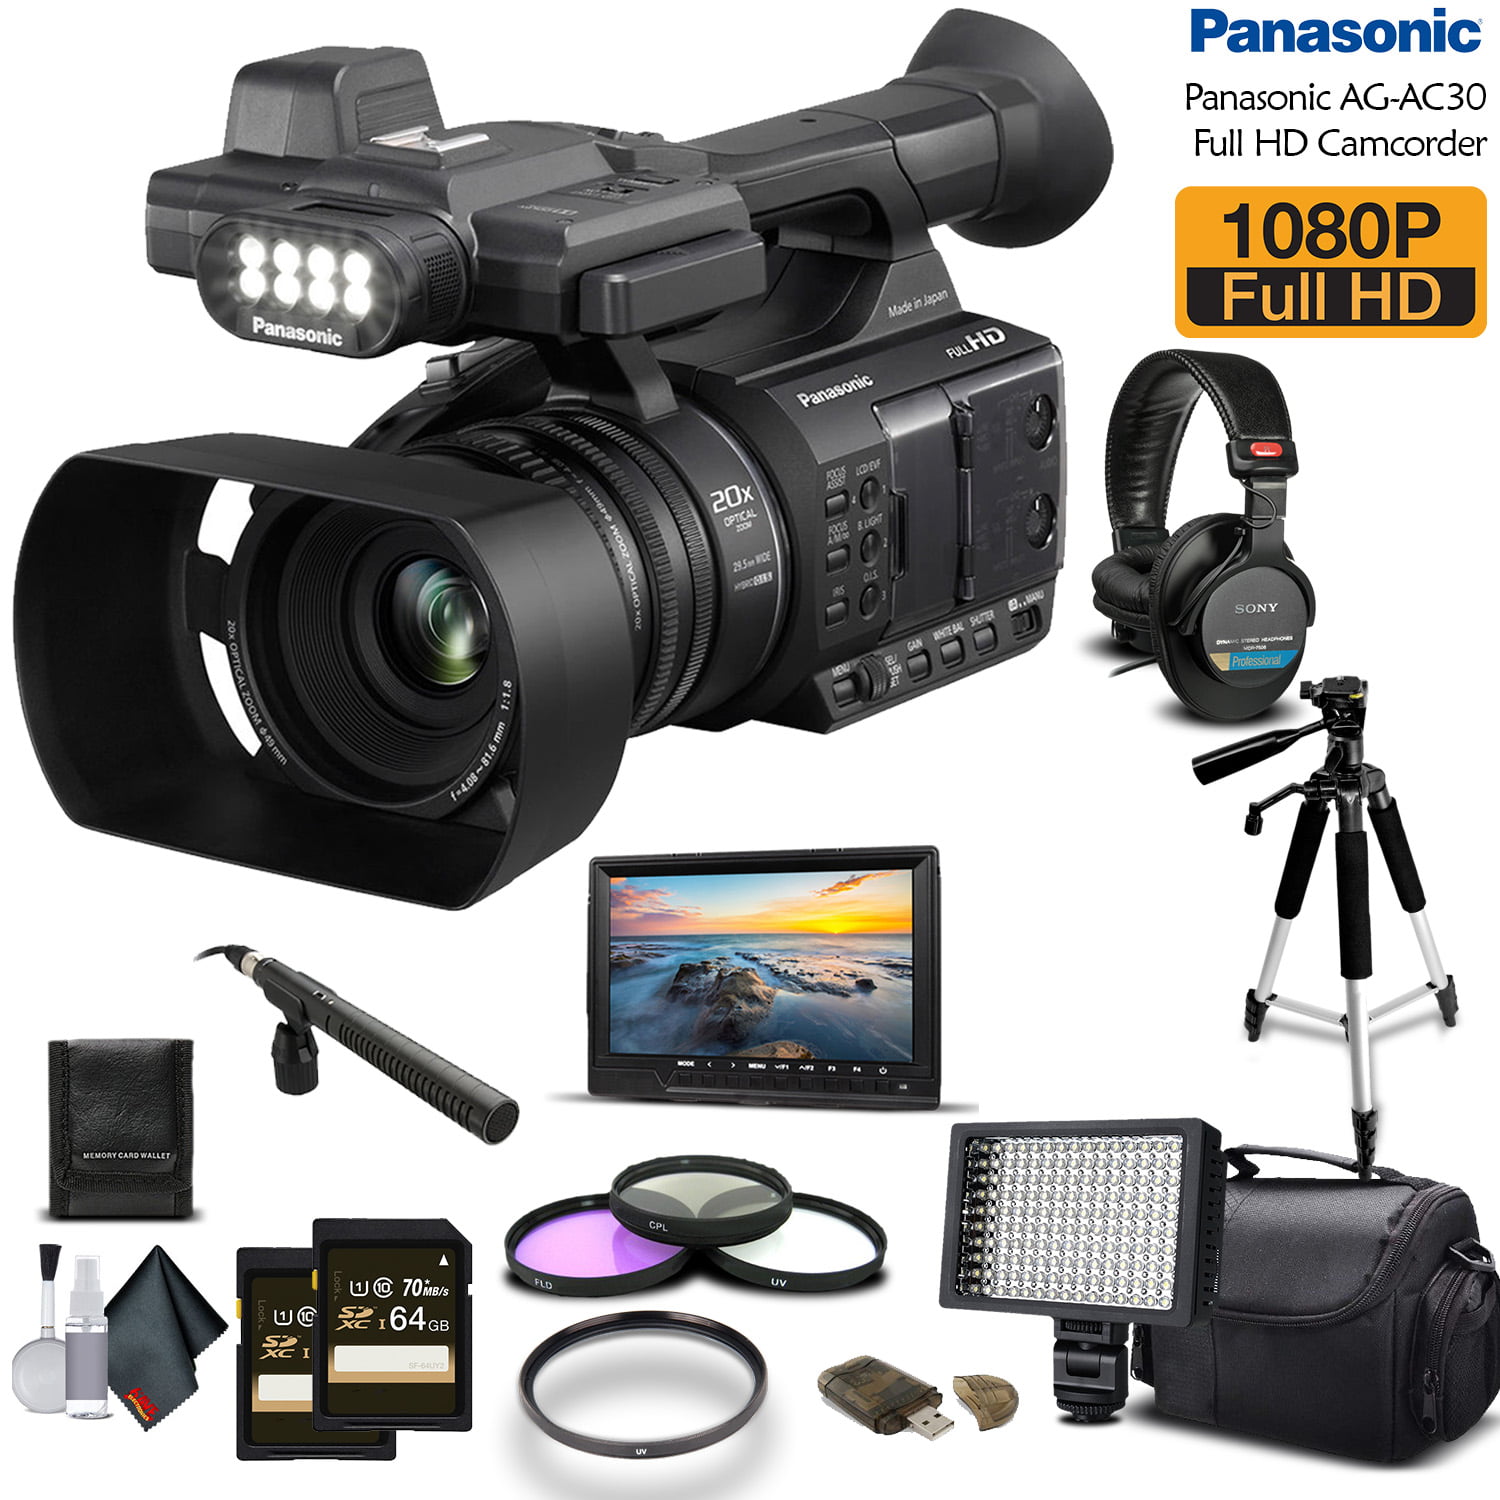 Panasonic AG-AC30 Full HD Camcorder (AG-AC30PJ) With 16GB Memory 